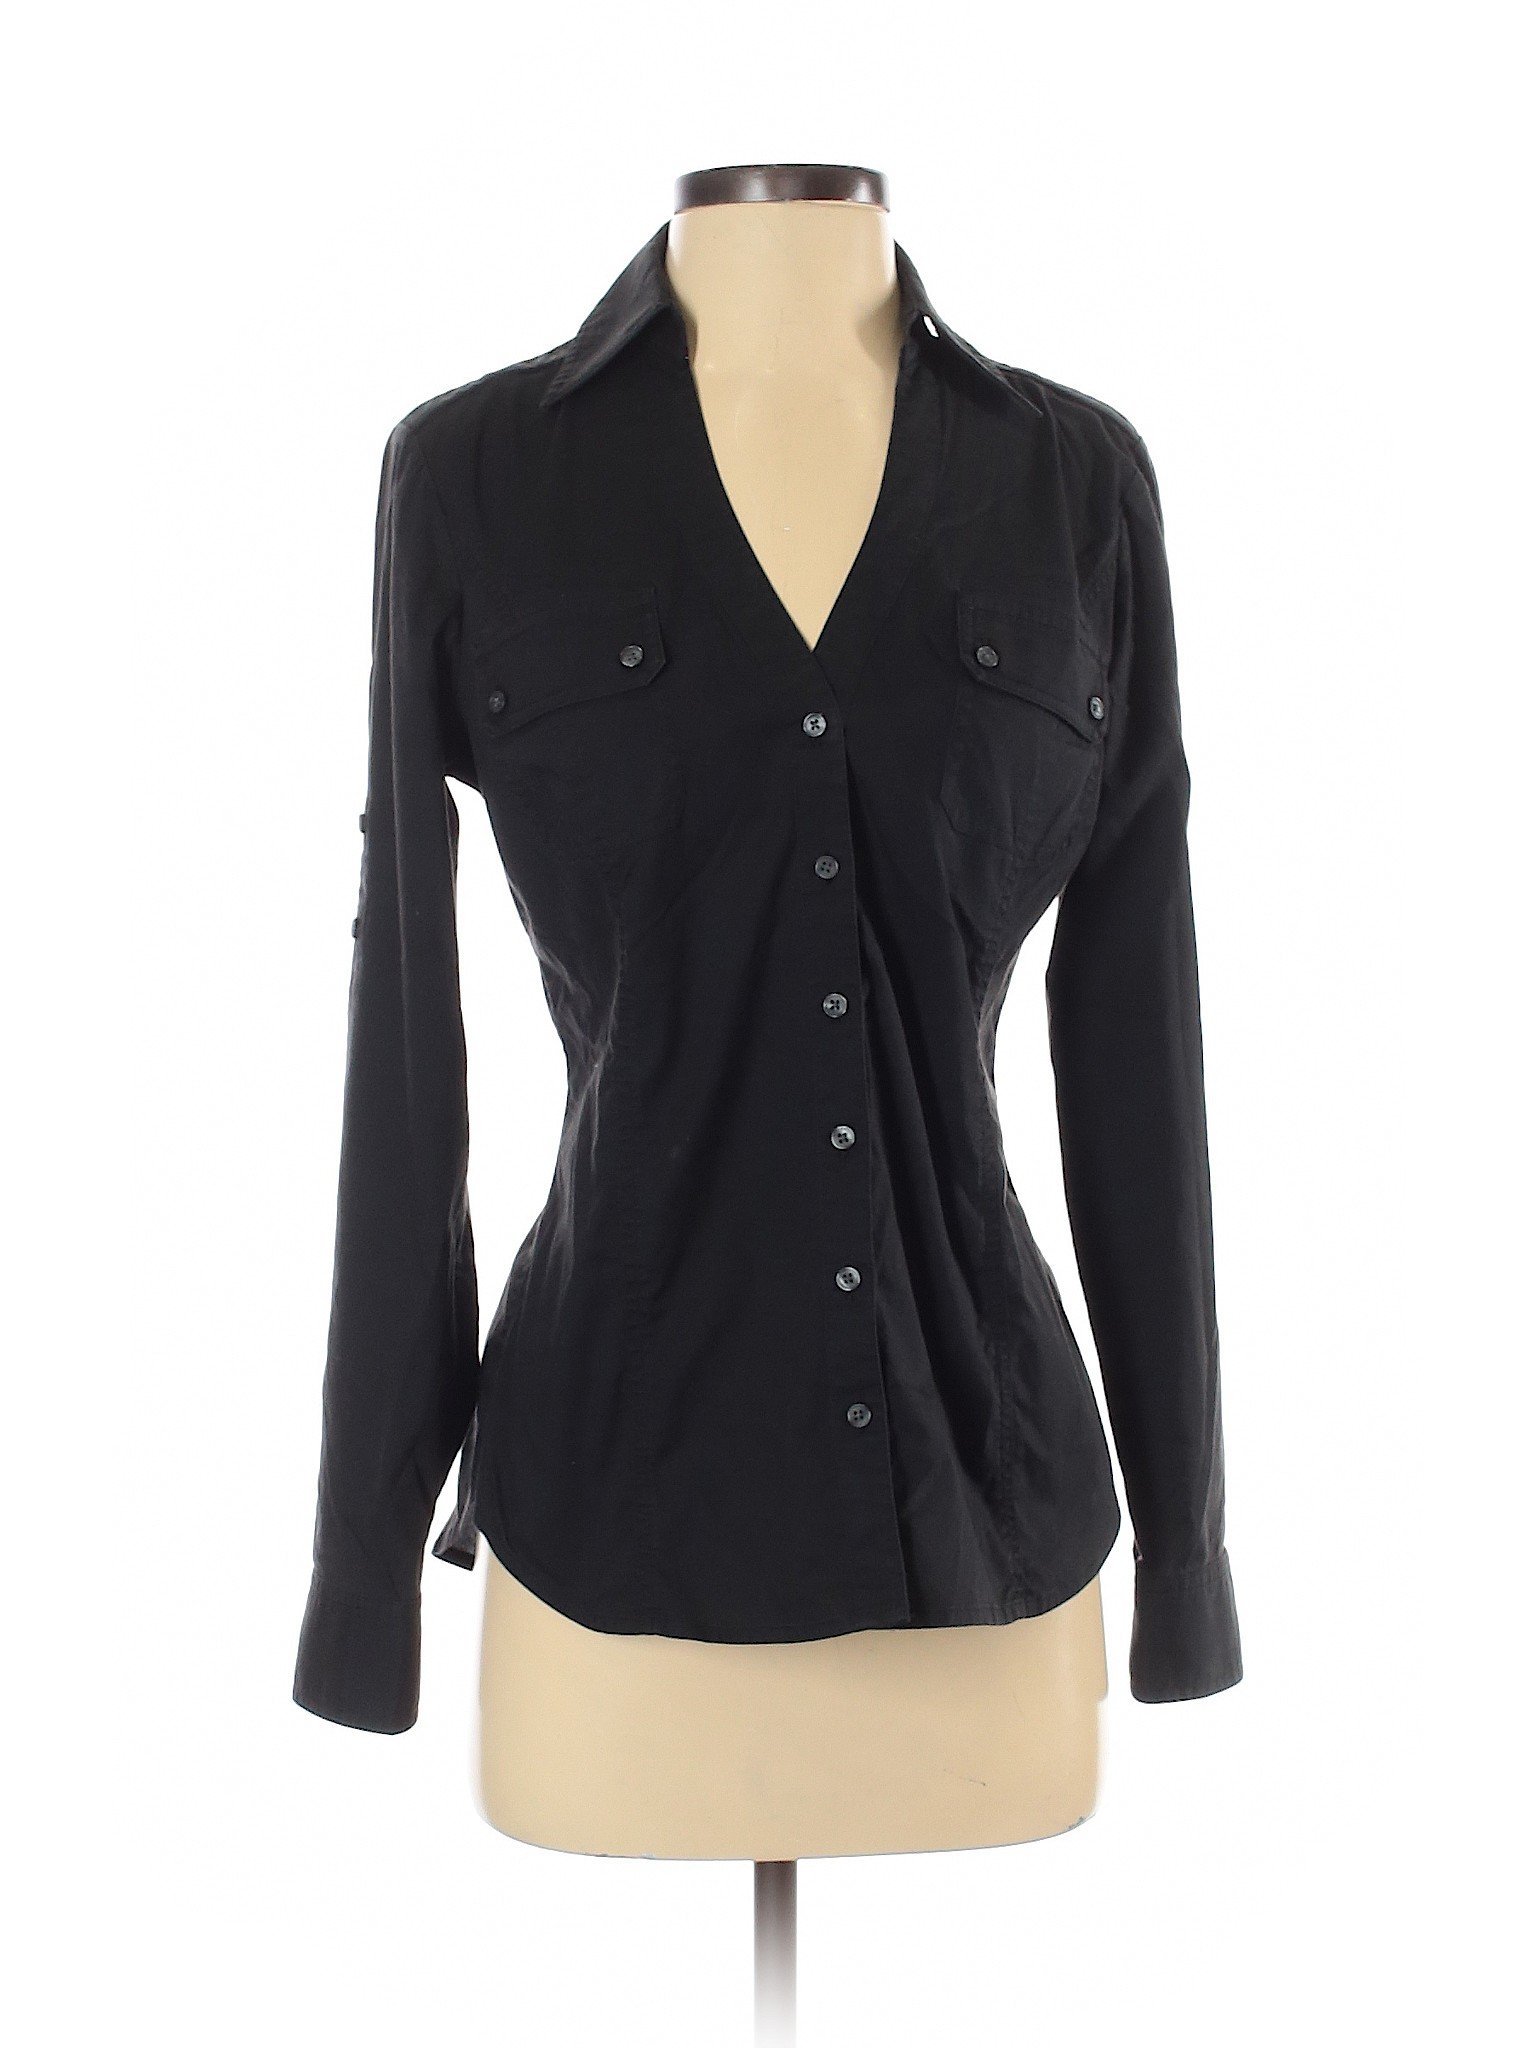 Express Women Black Long Sleeve Button-Down Shirt S | eBay